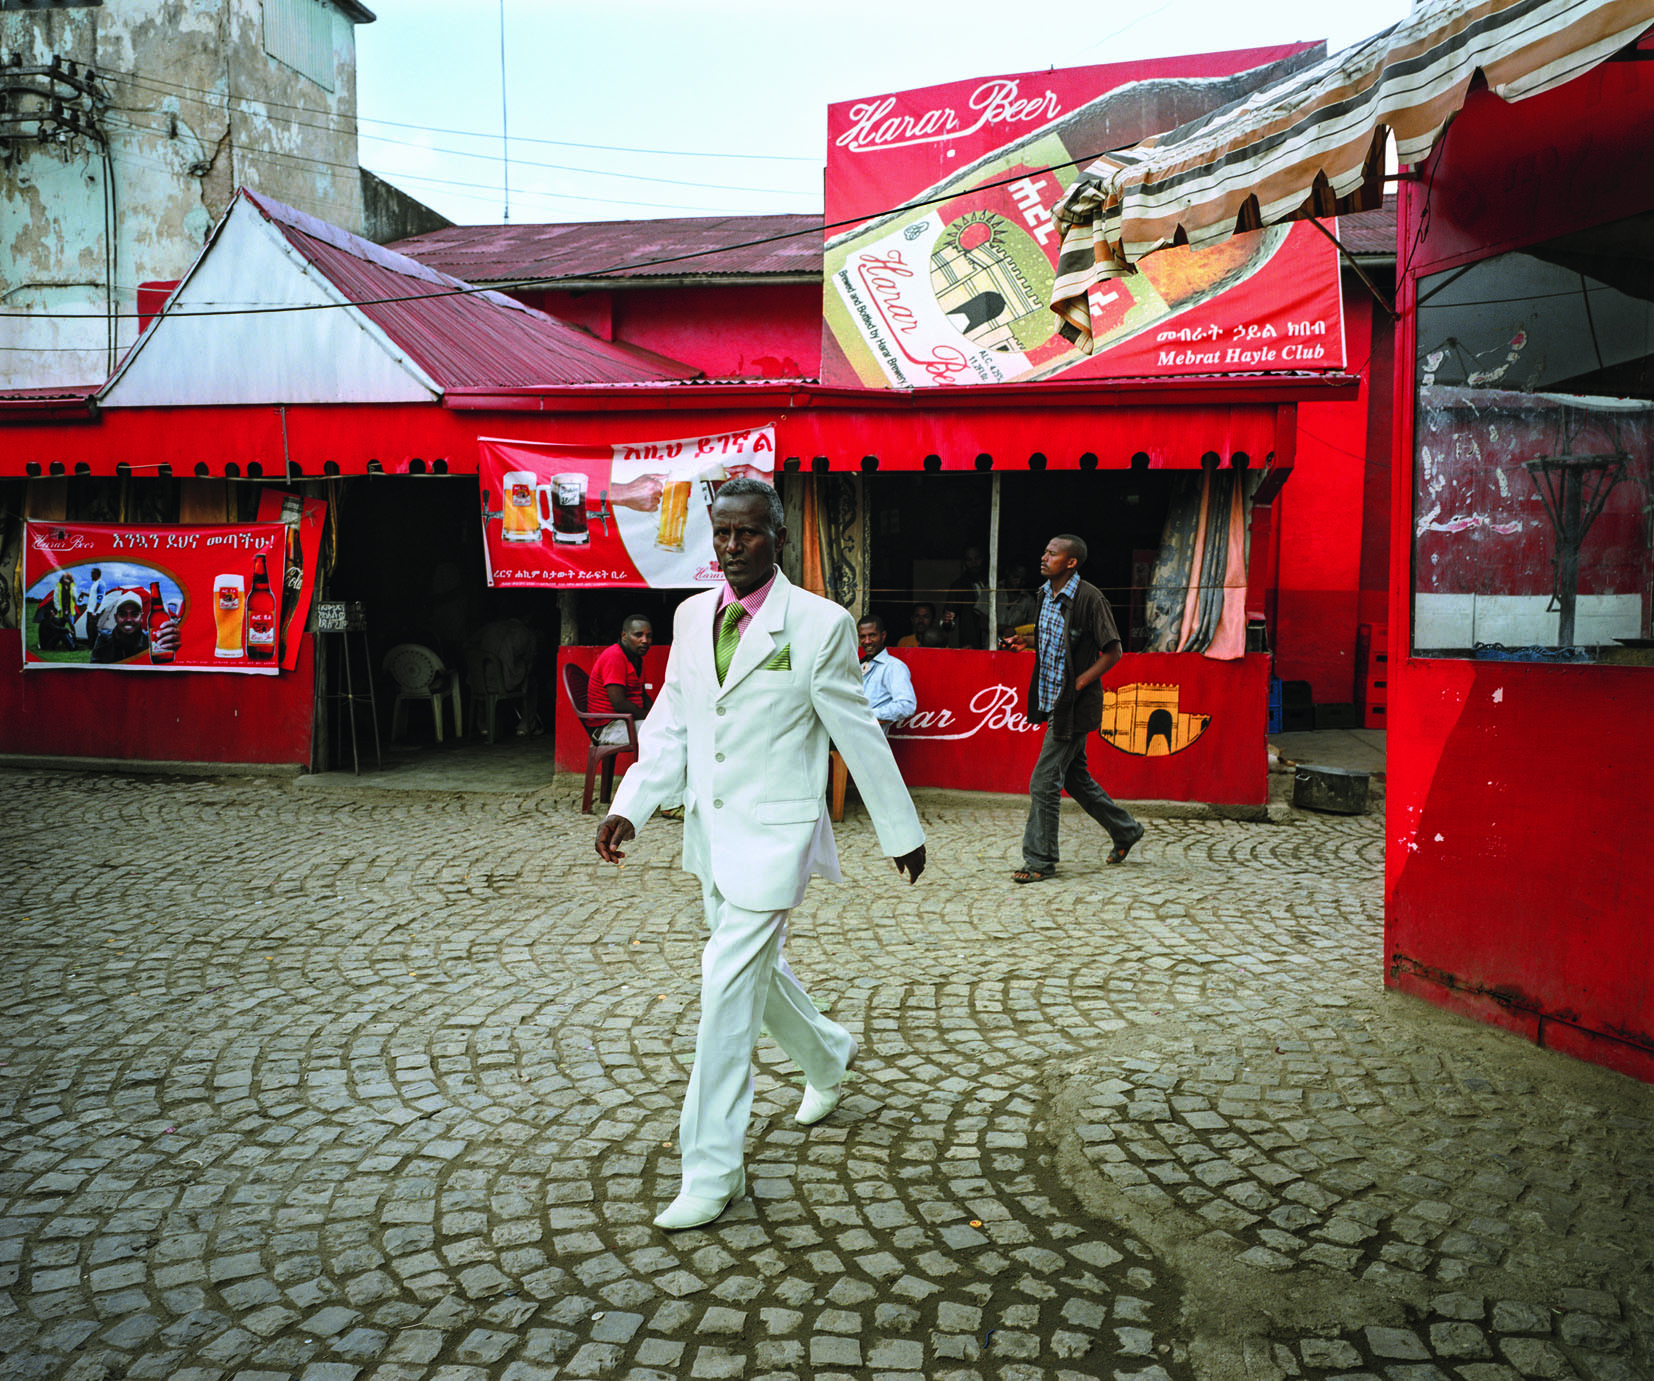 Raymond Depardon Harar, Éthiopie. 2013 170 x 203 cm © Raymond Depardon / Magnum Photos. Crédits photographiques : Légende. Lieu. Date © Raymond Depardon / Magnum Photos